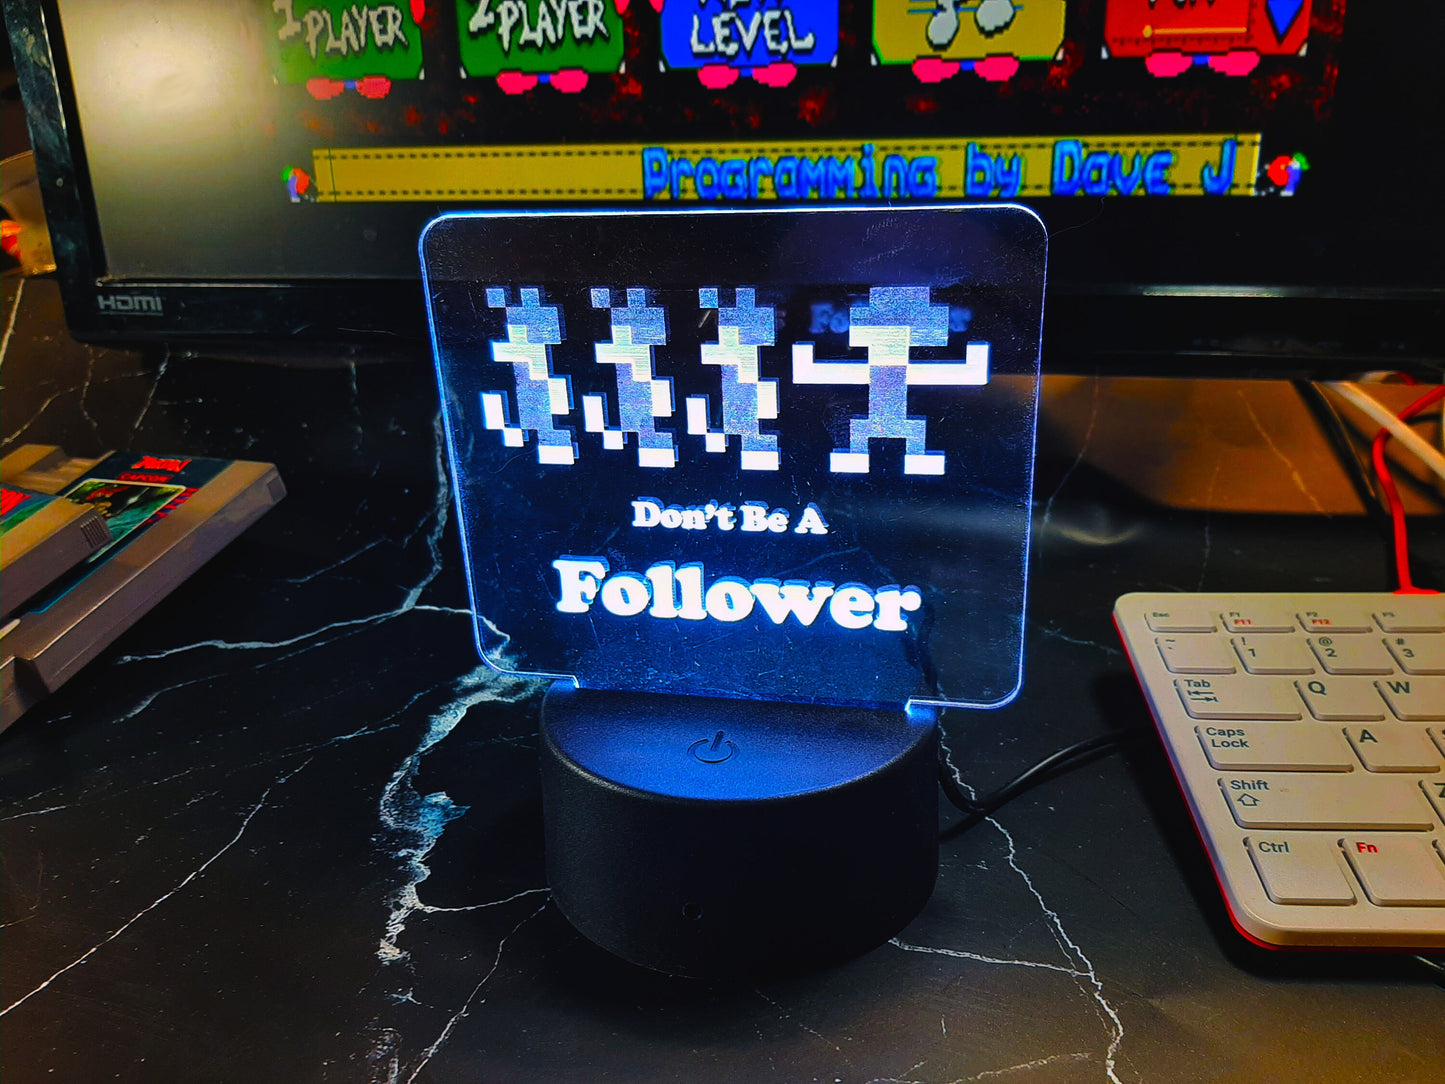 RETRO Gaming LED desk light - Lemming, don't be a follower, video game classics night light